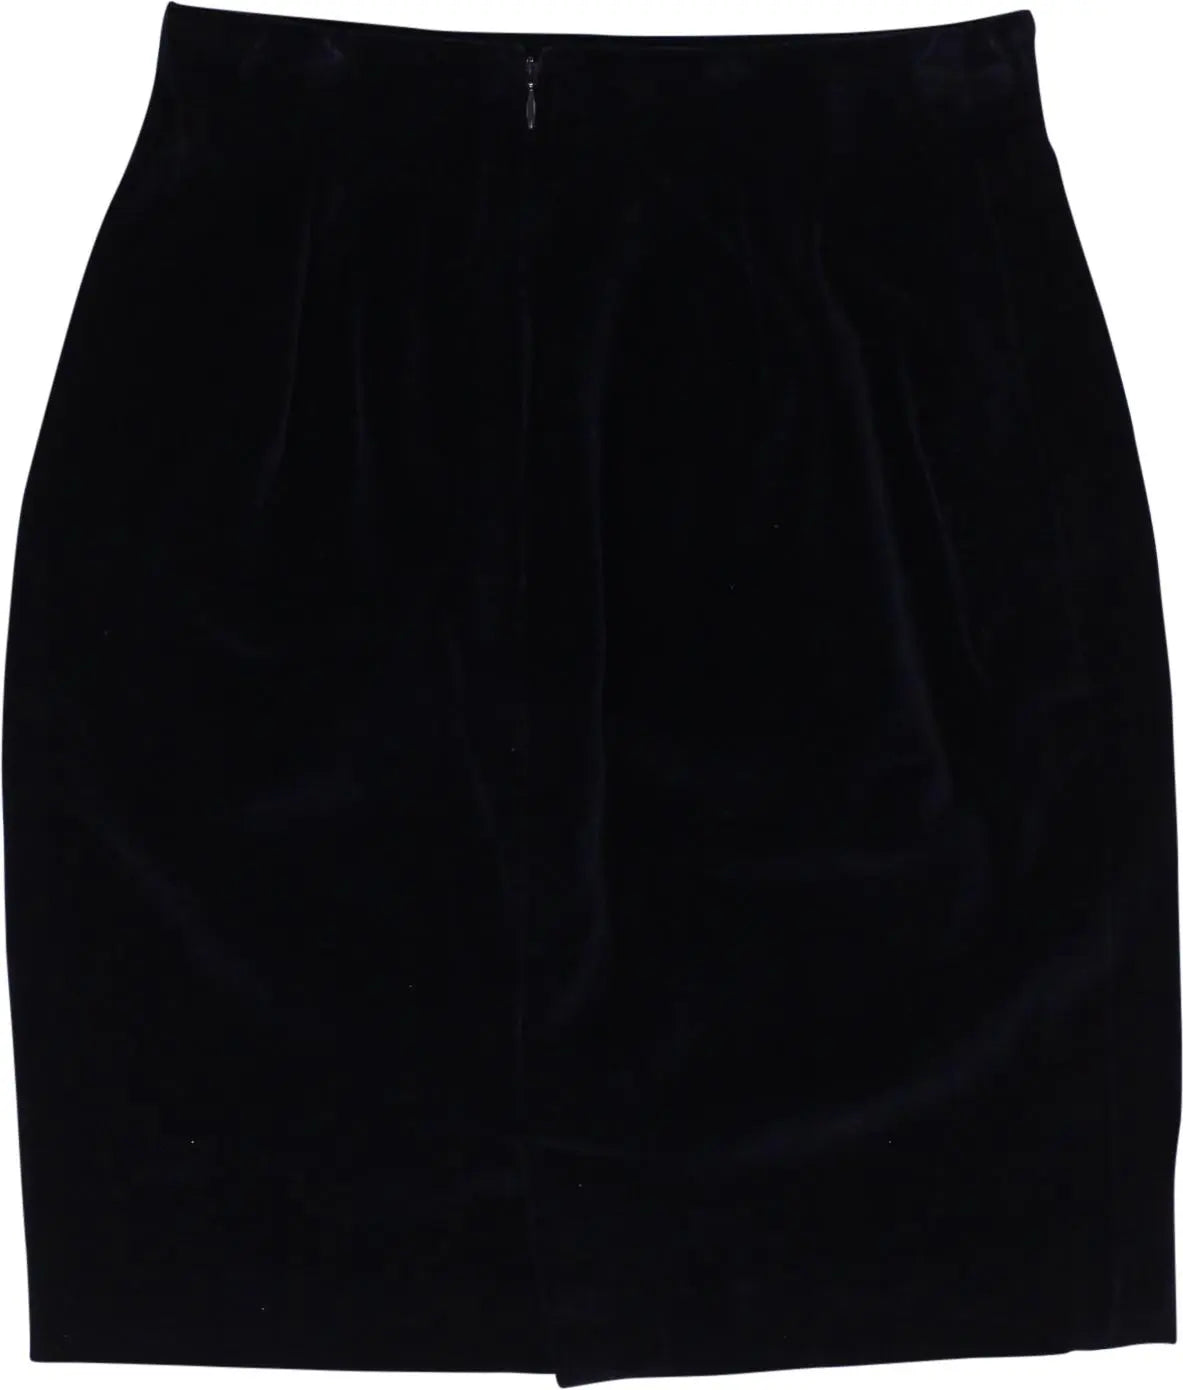 Les Copains - Velvet Skirt by Les Copains- ThriftTale.com - Vintage and second handclothing